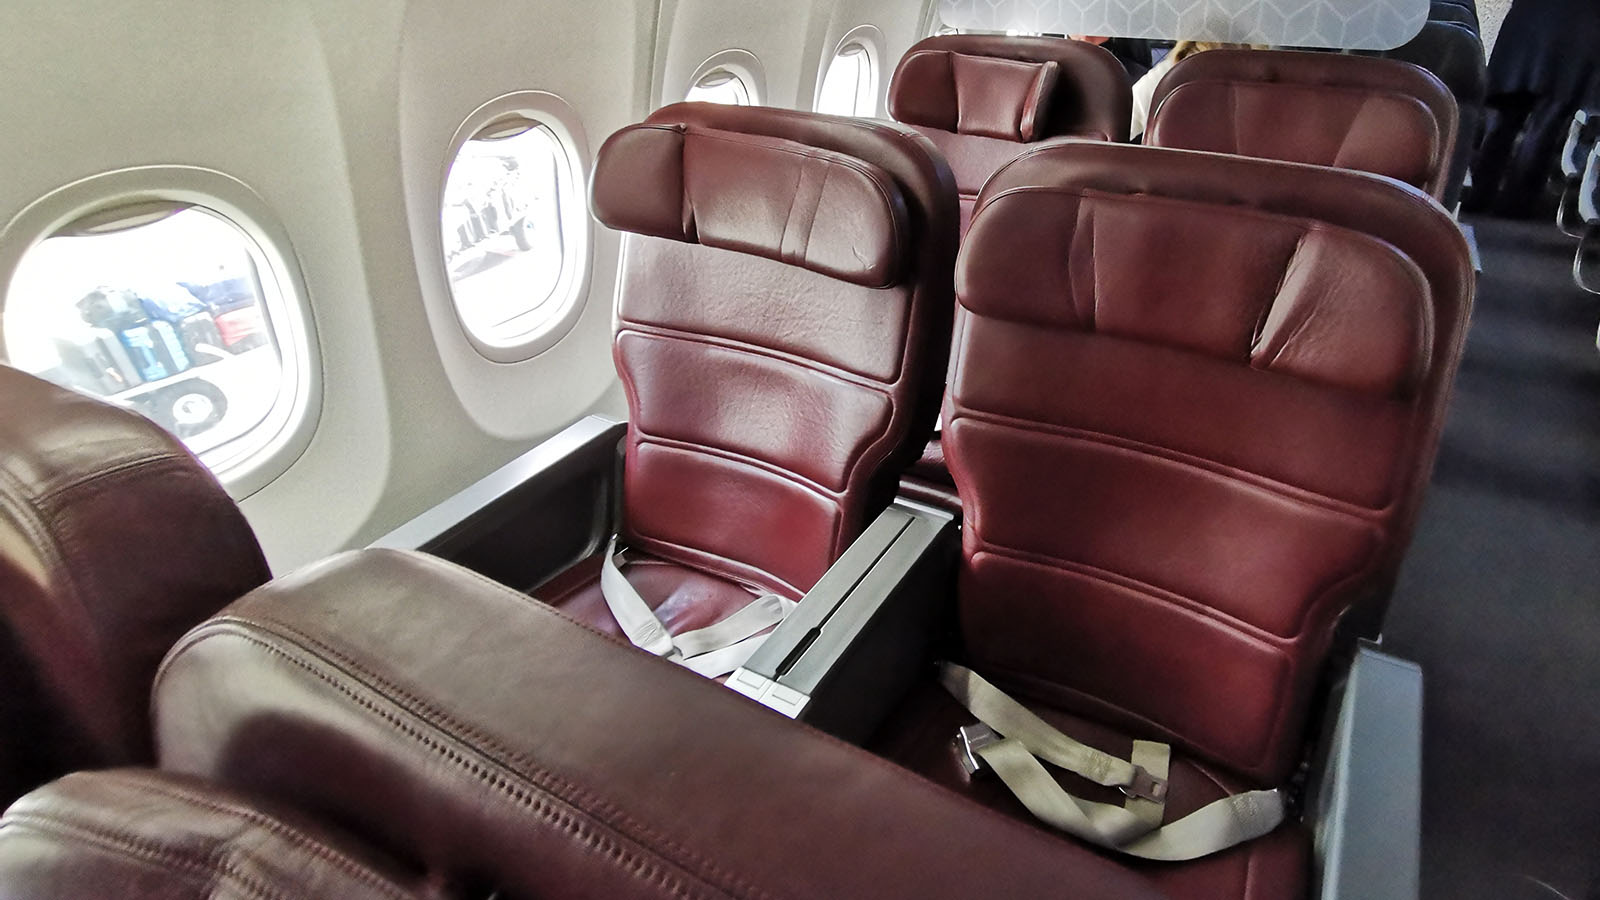 Qantas Boeing 737 Business seating